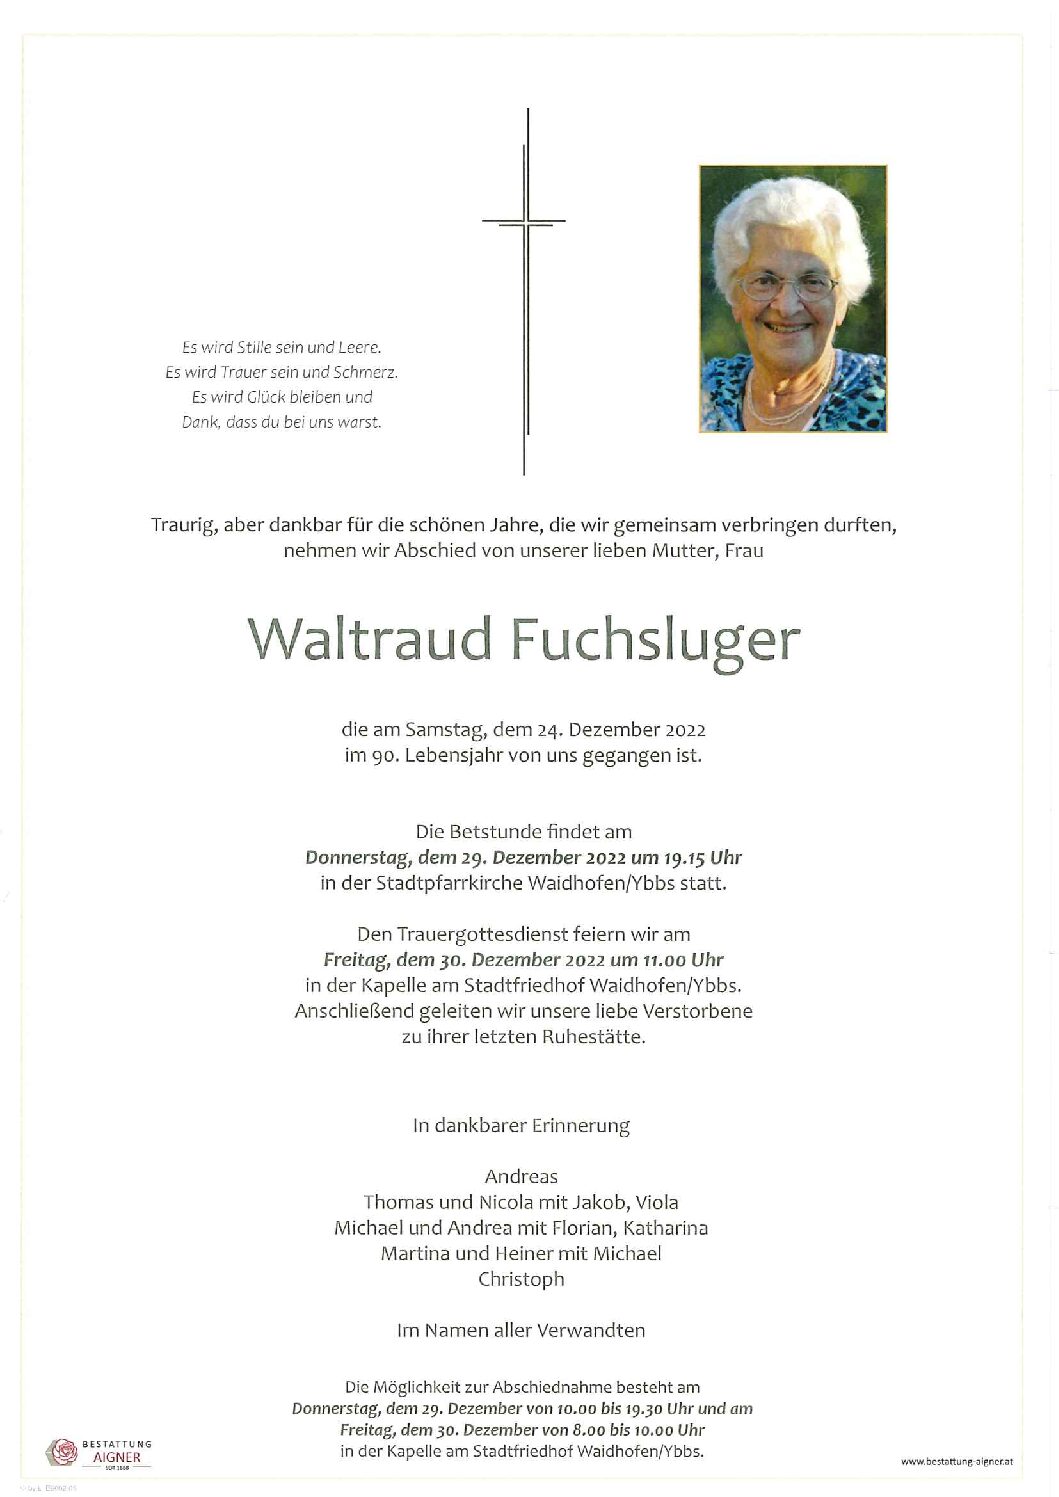 Waltraud Fuchsluger